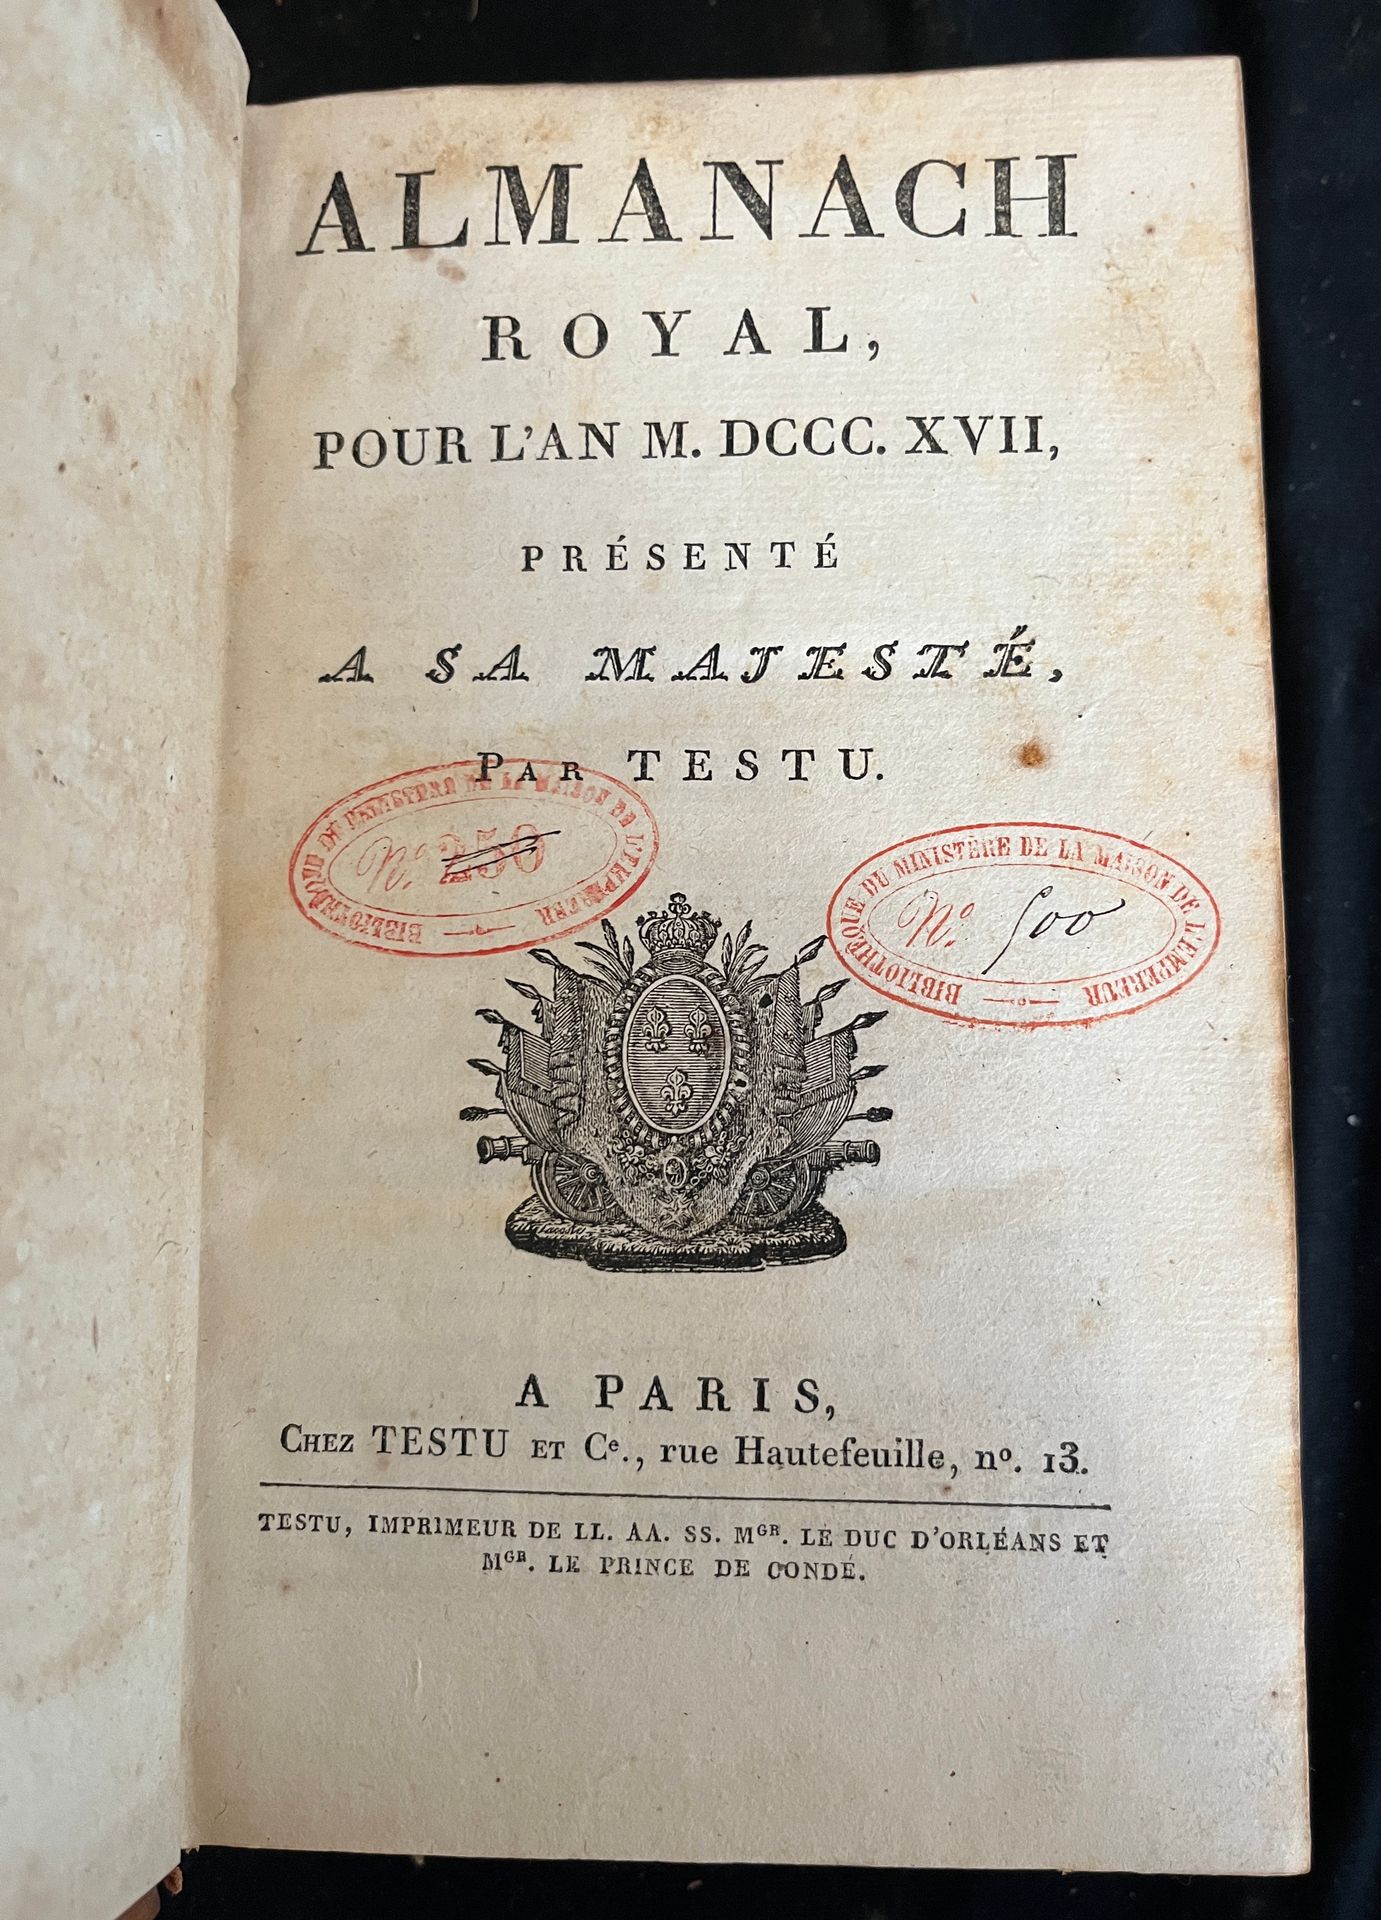 Null [ALMANACH]
Royal almanac for the years 1816 and 1817. Paris, at Testu rue H&hellip;